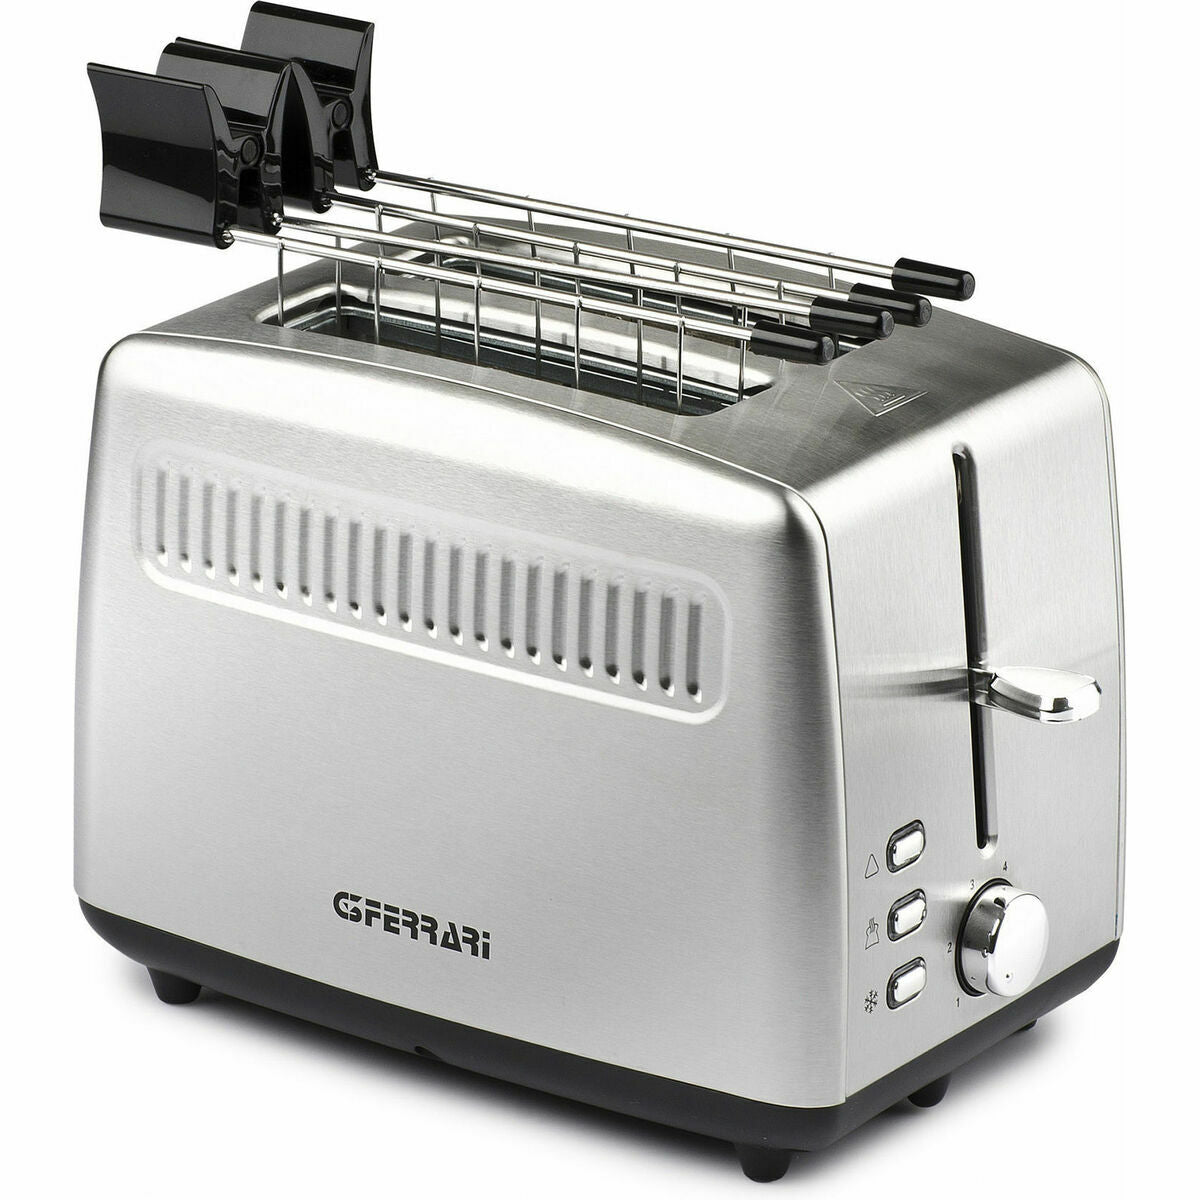 Toaster G3Ferrari G10064 770-920 W Edelstahl - CA International  